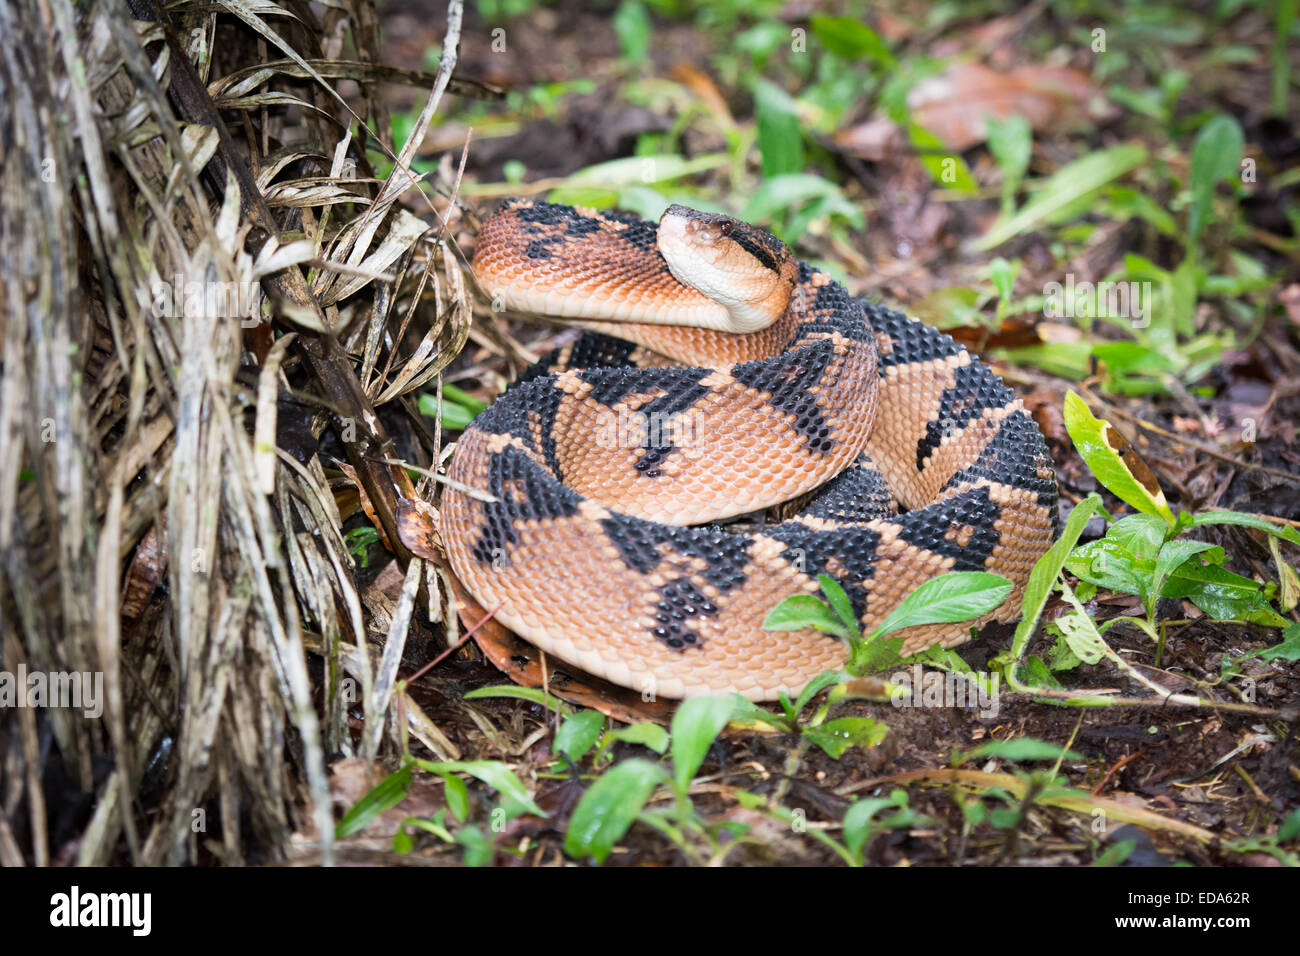 Shushupe - Amazon Bushmaster snake (lachesis muta) Stock Photo